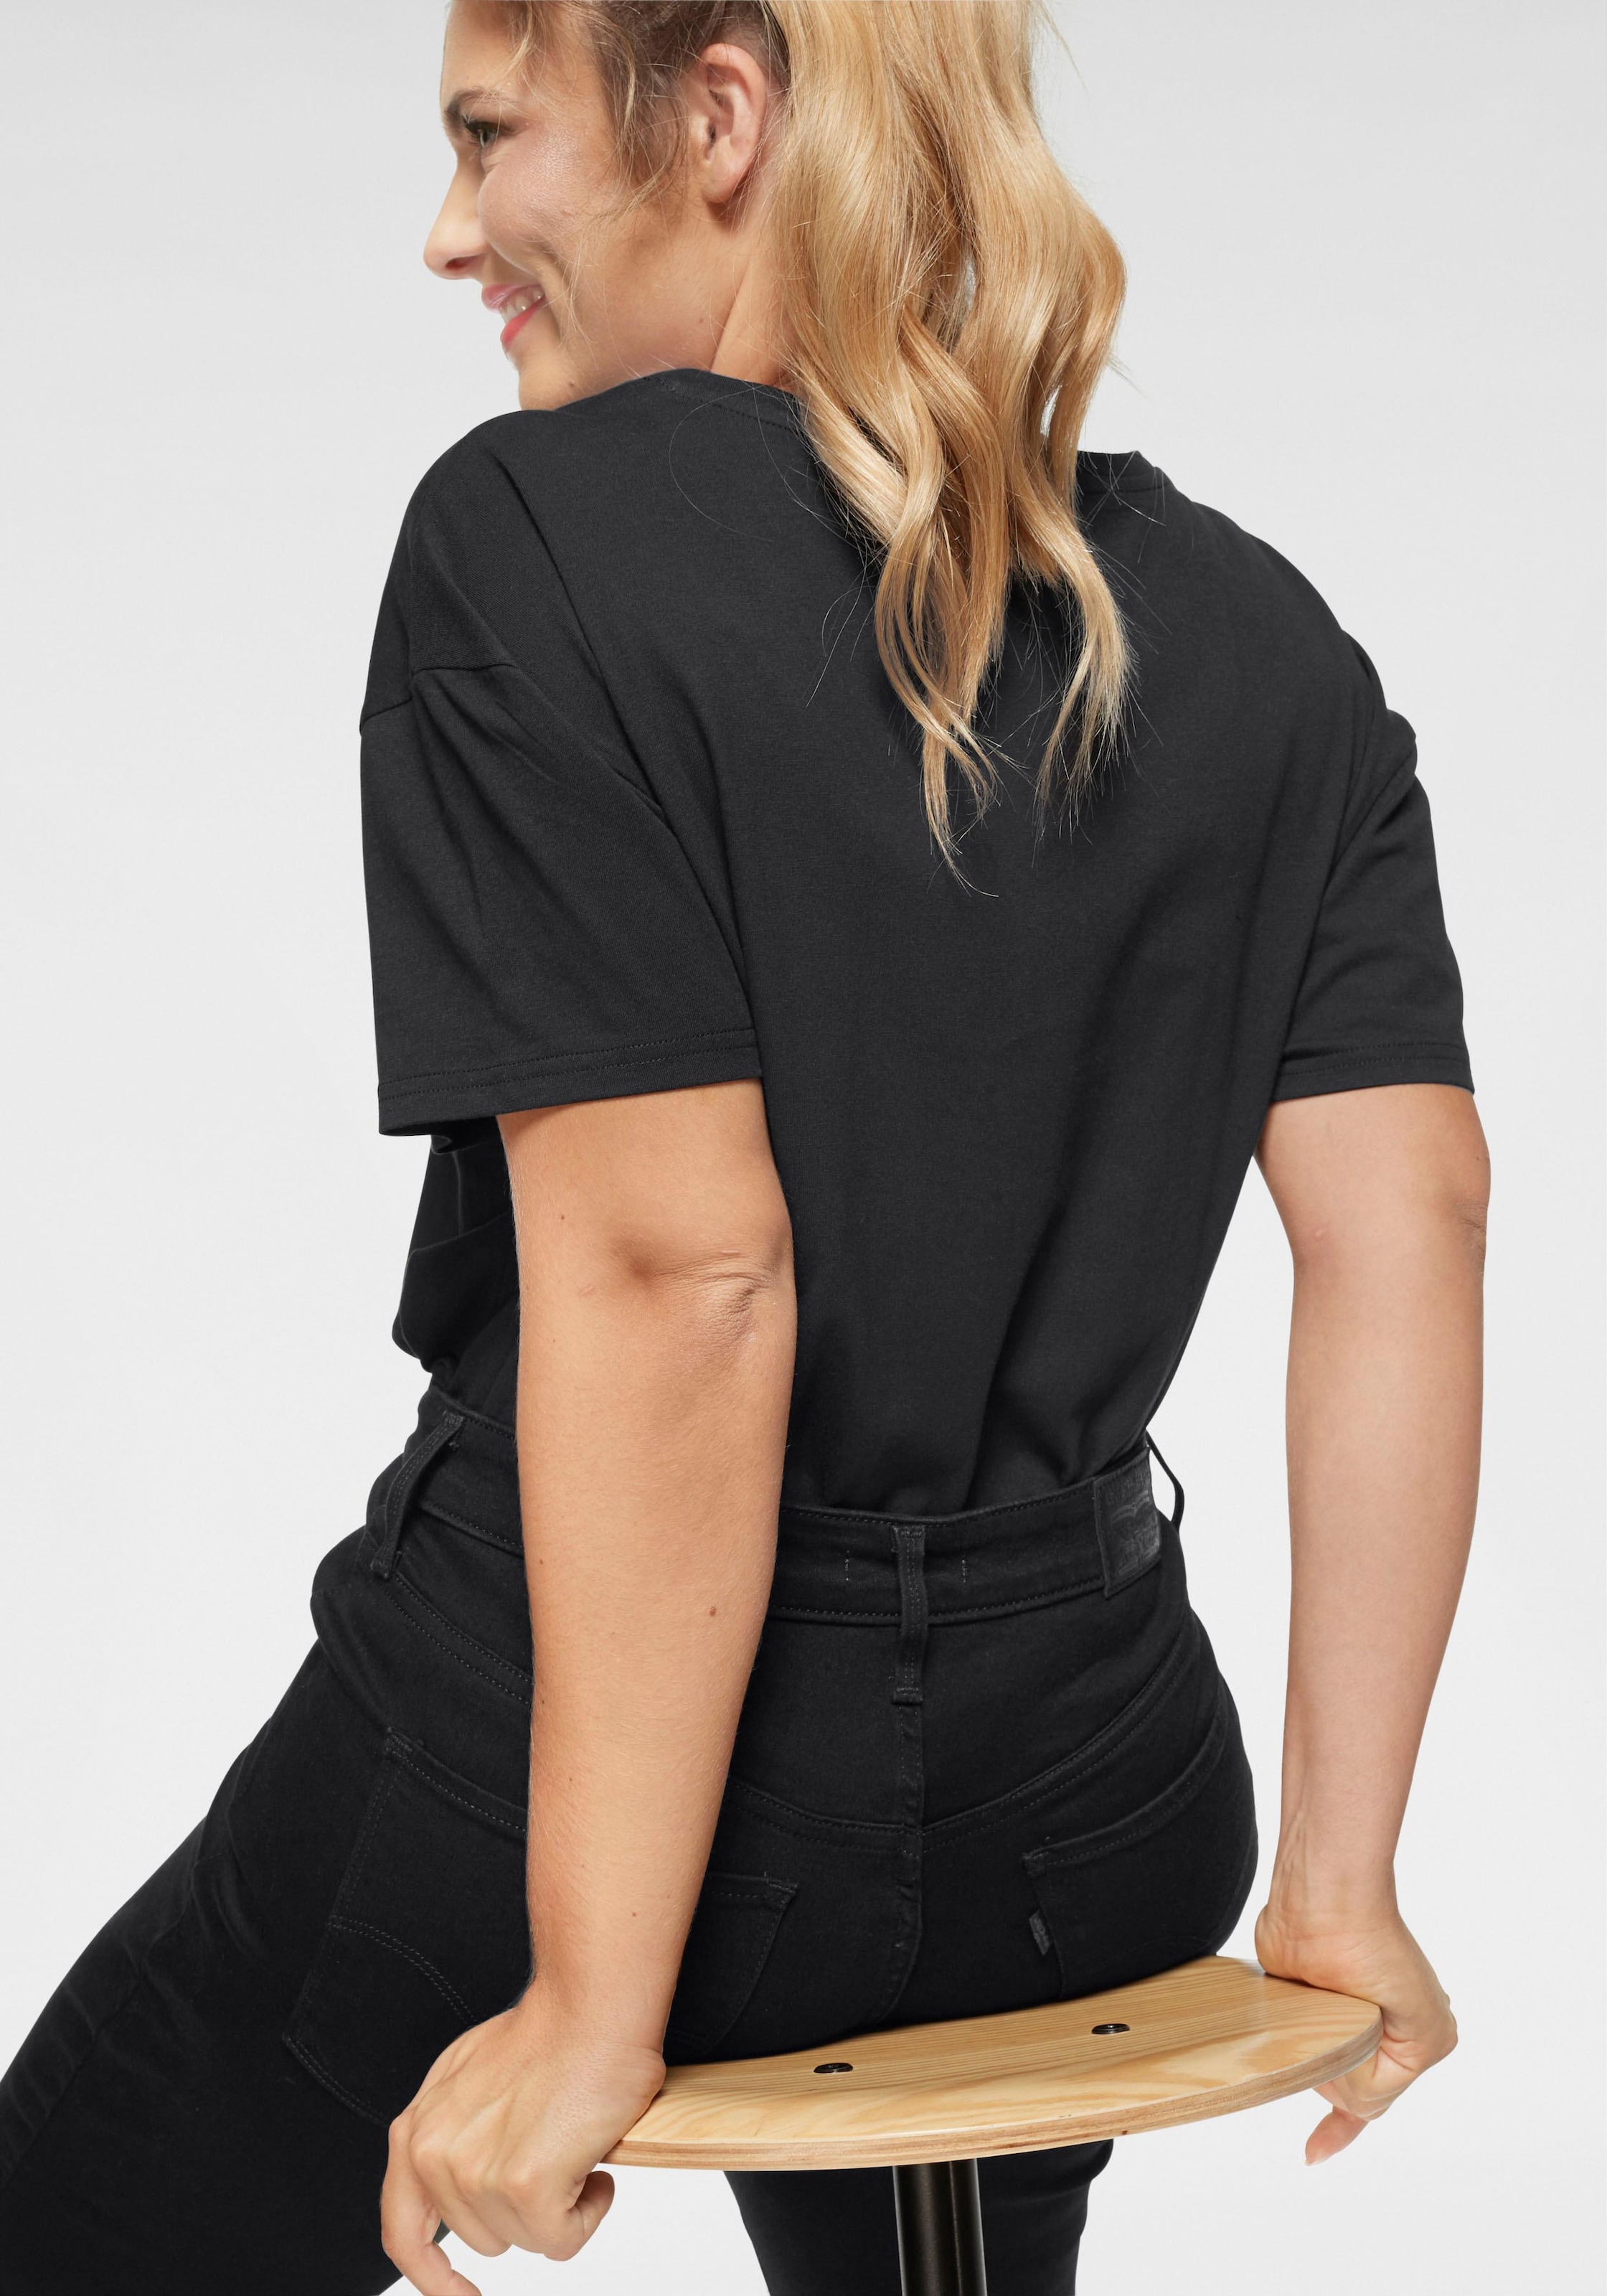 Oversized-Look AJC Friday trendigen BAUR - Black T-Shirt, | KOLLEKTION NEUE im